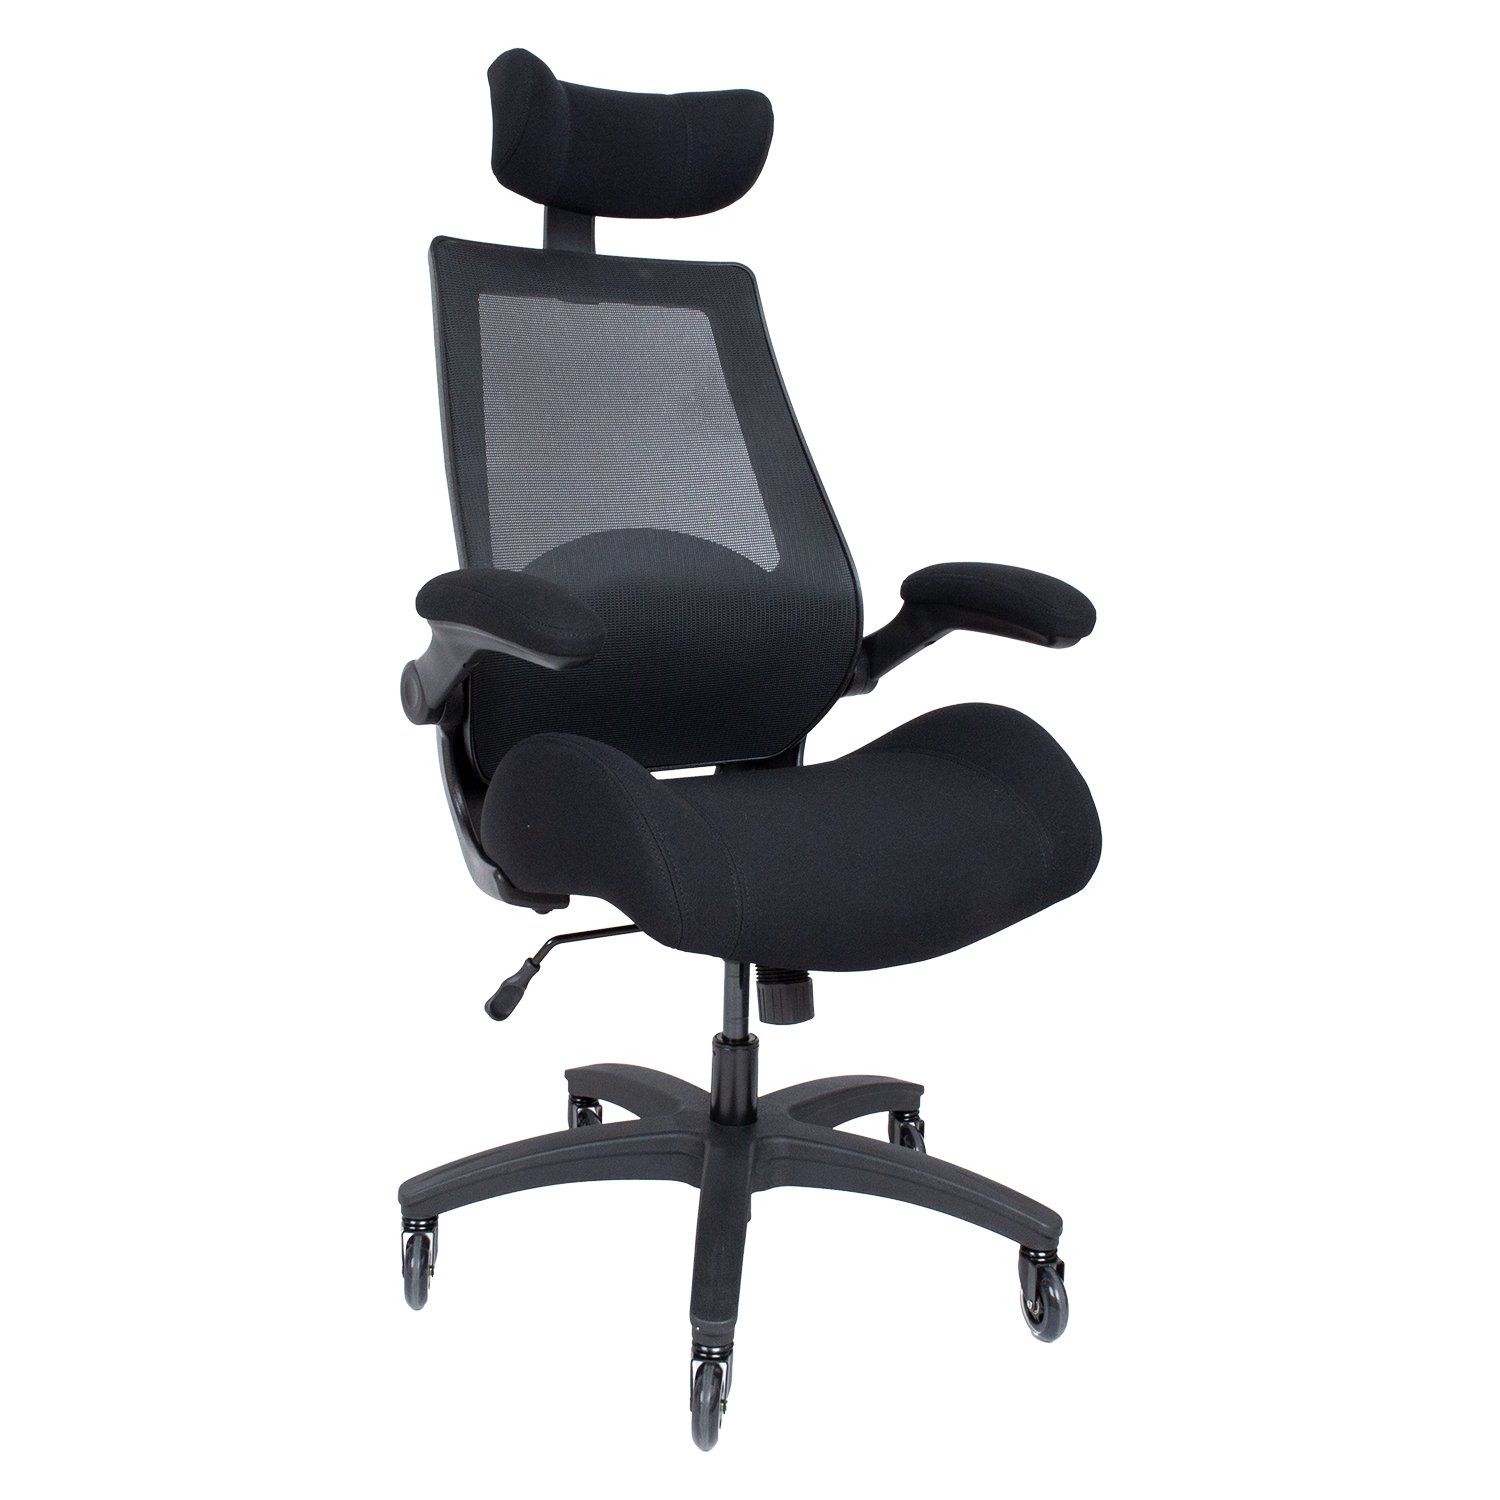 Biuro kėdė MILLER, 70x71x121-131 cm, juoda - 1